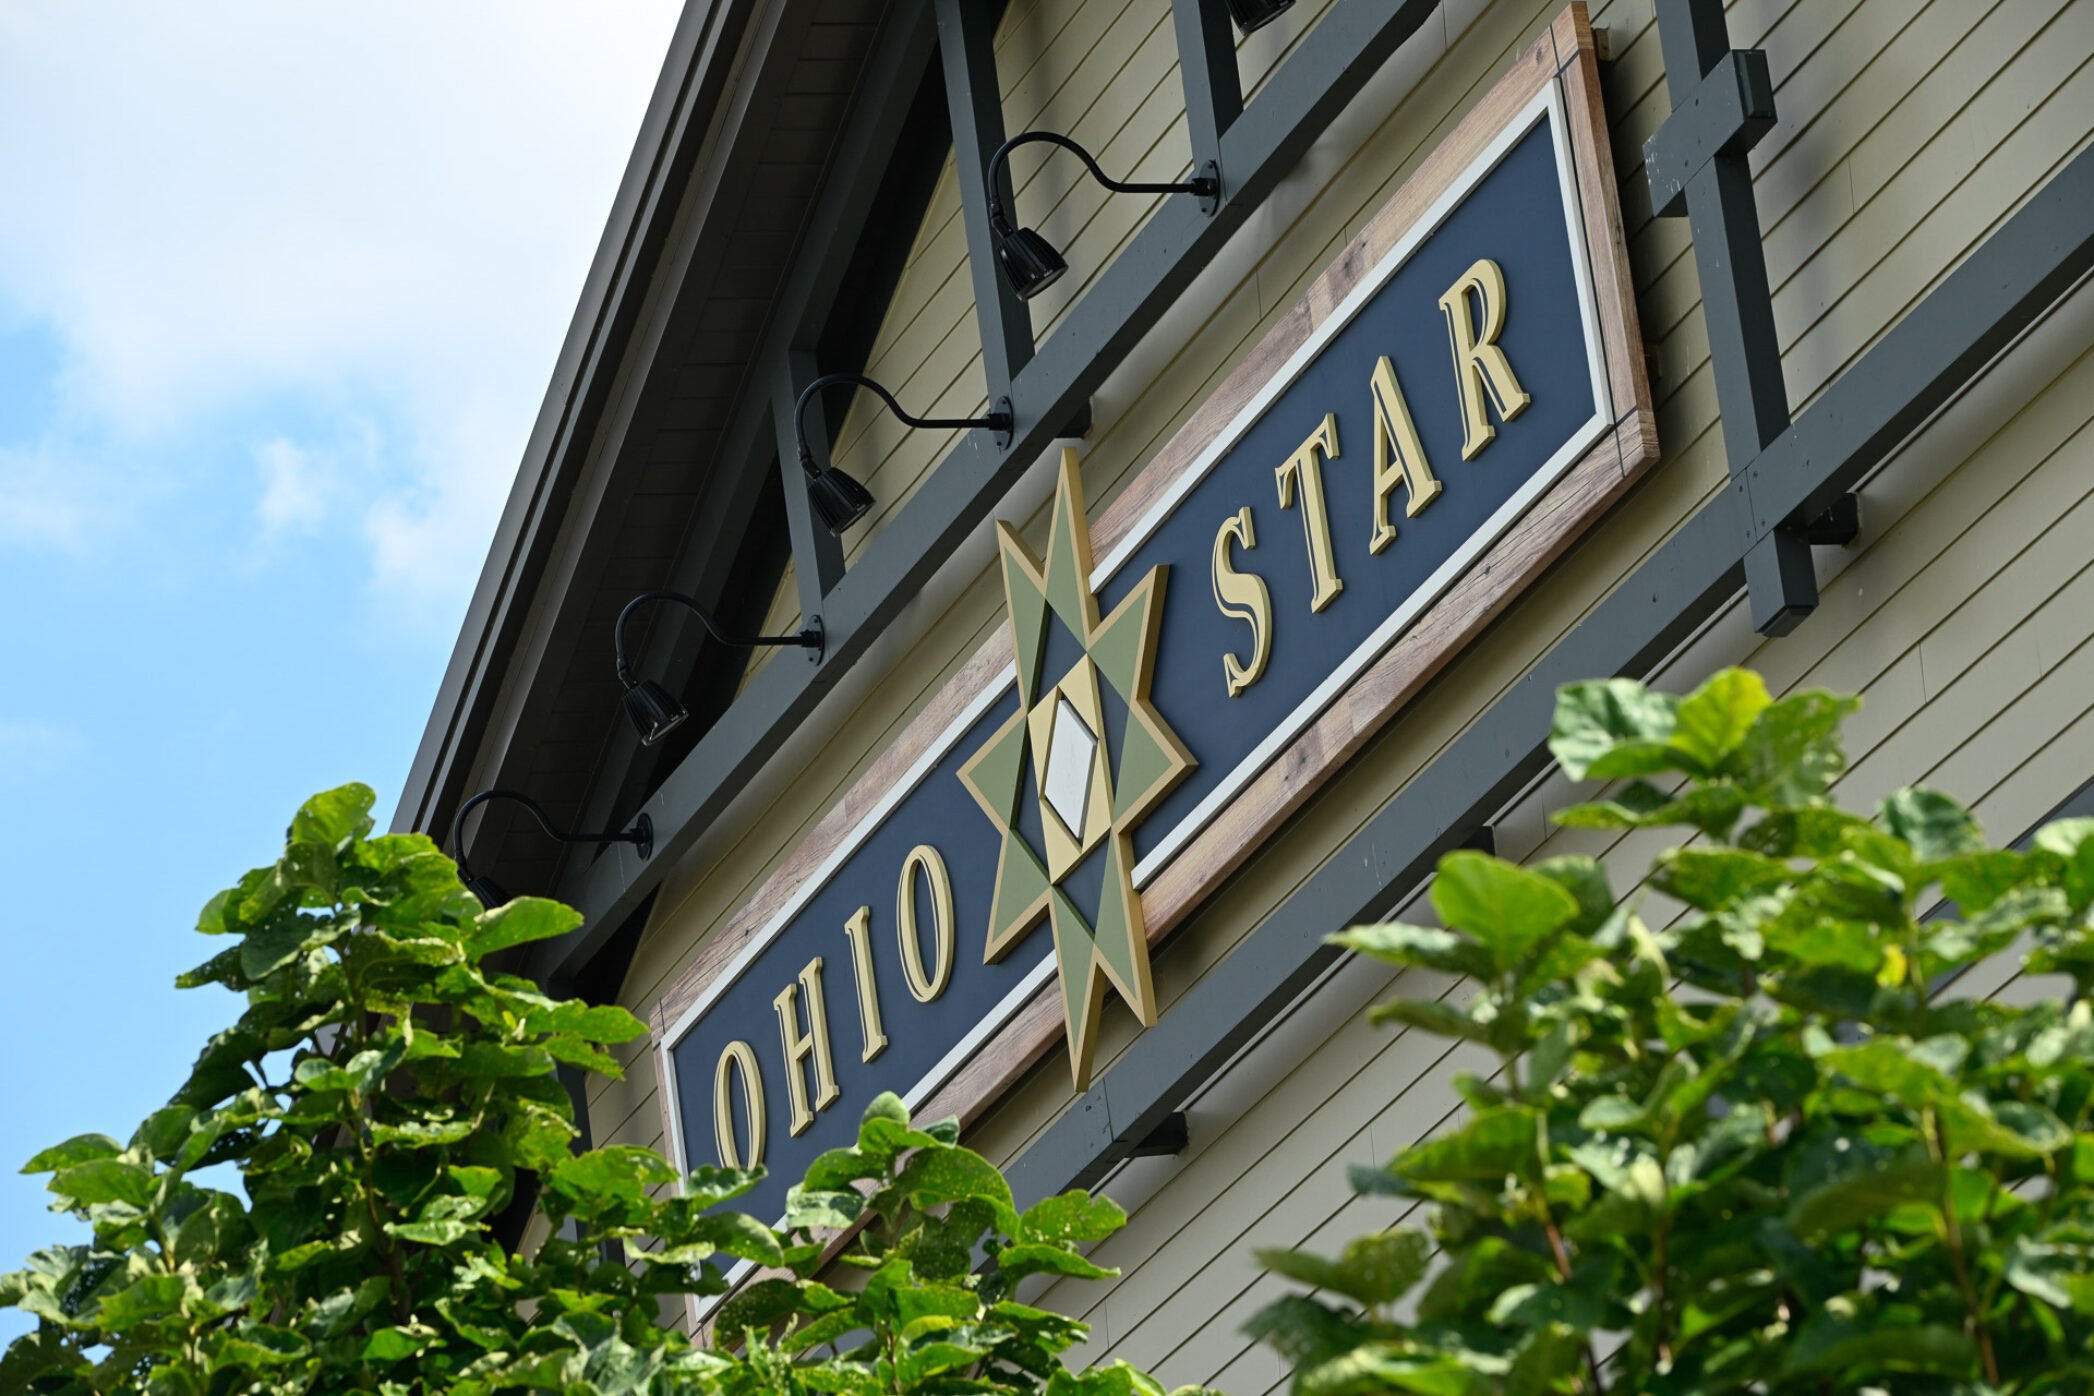 Ohio Star theater sign